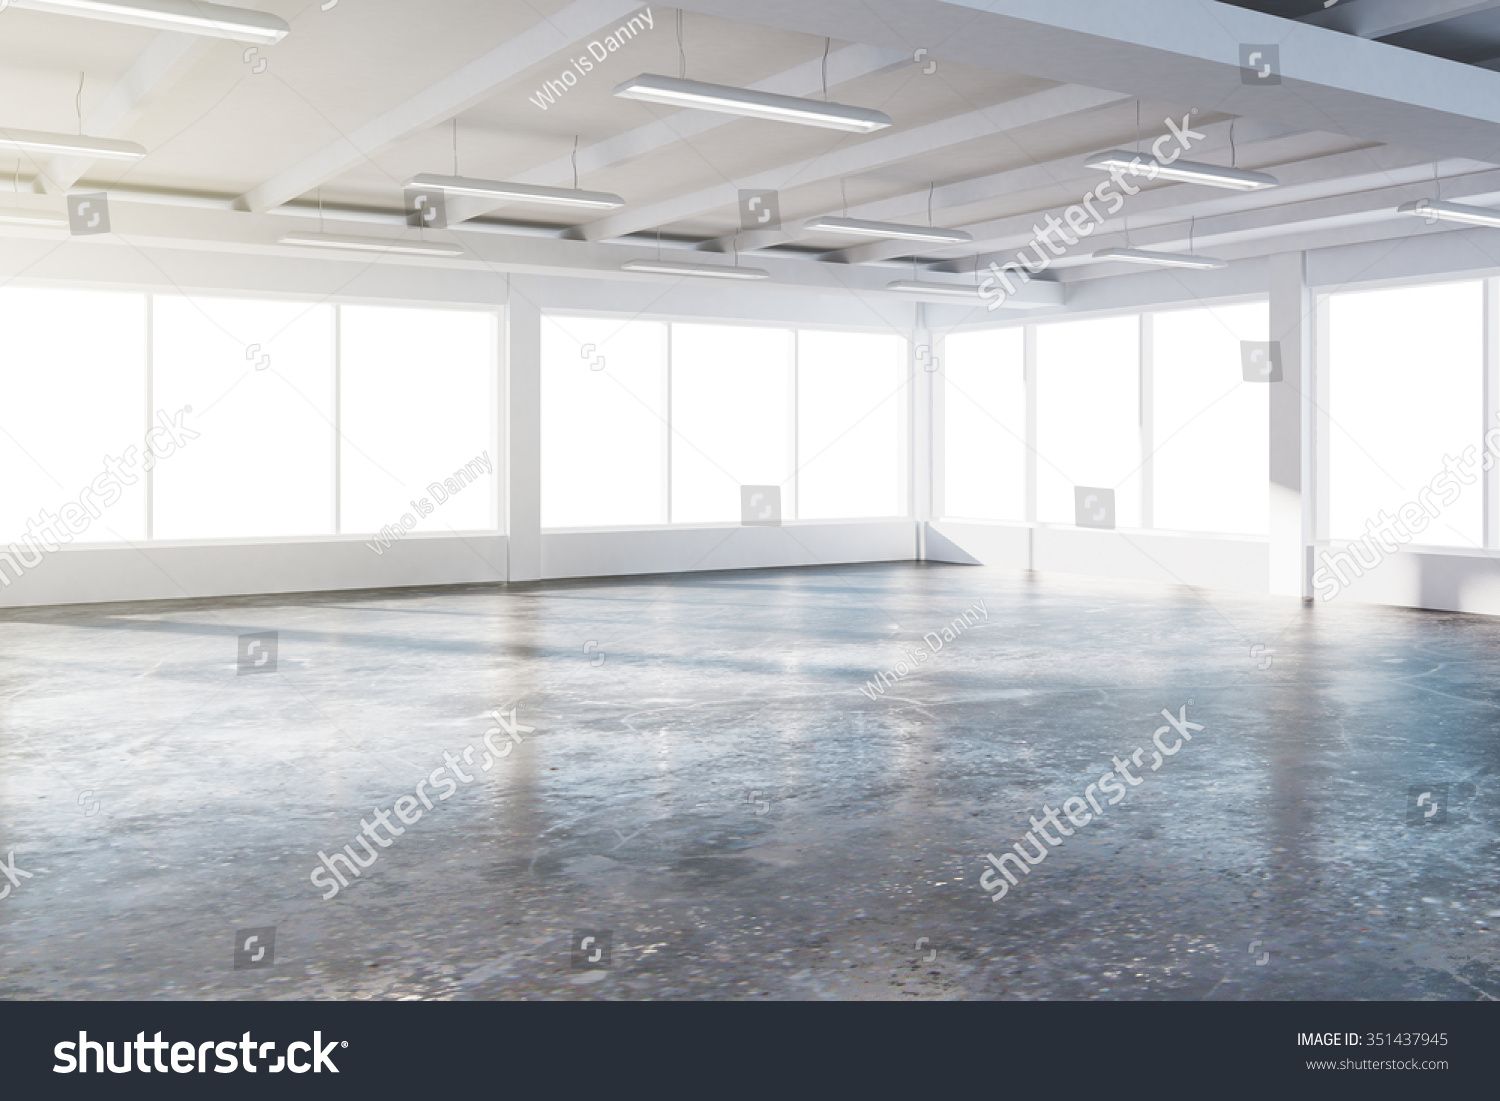 Sunny spacious hangar area with concrete floor and windows in floor 3D Render #351437945